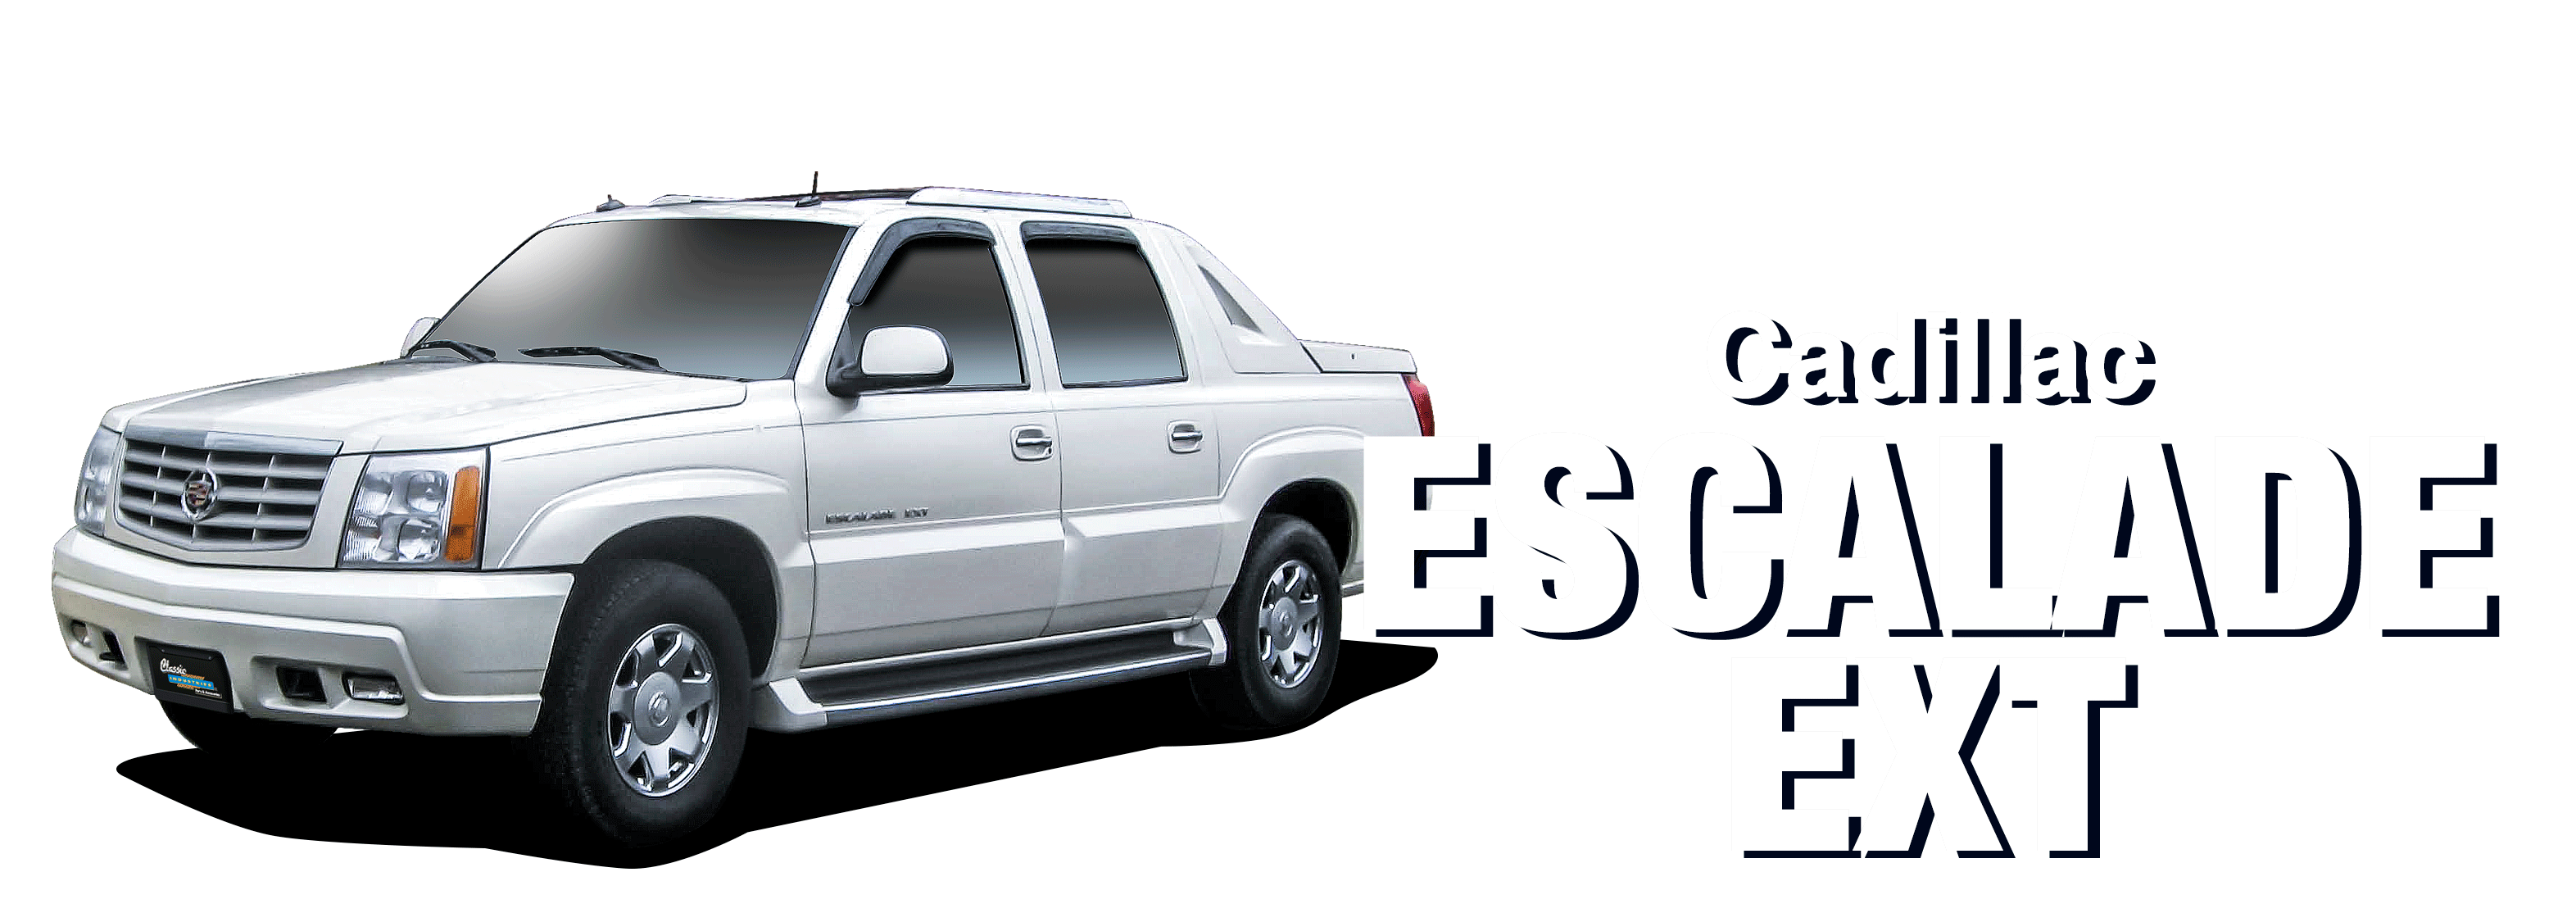 Cadillac-EscaladeEXT-vehicle-desktop